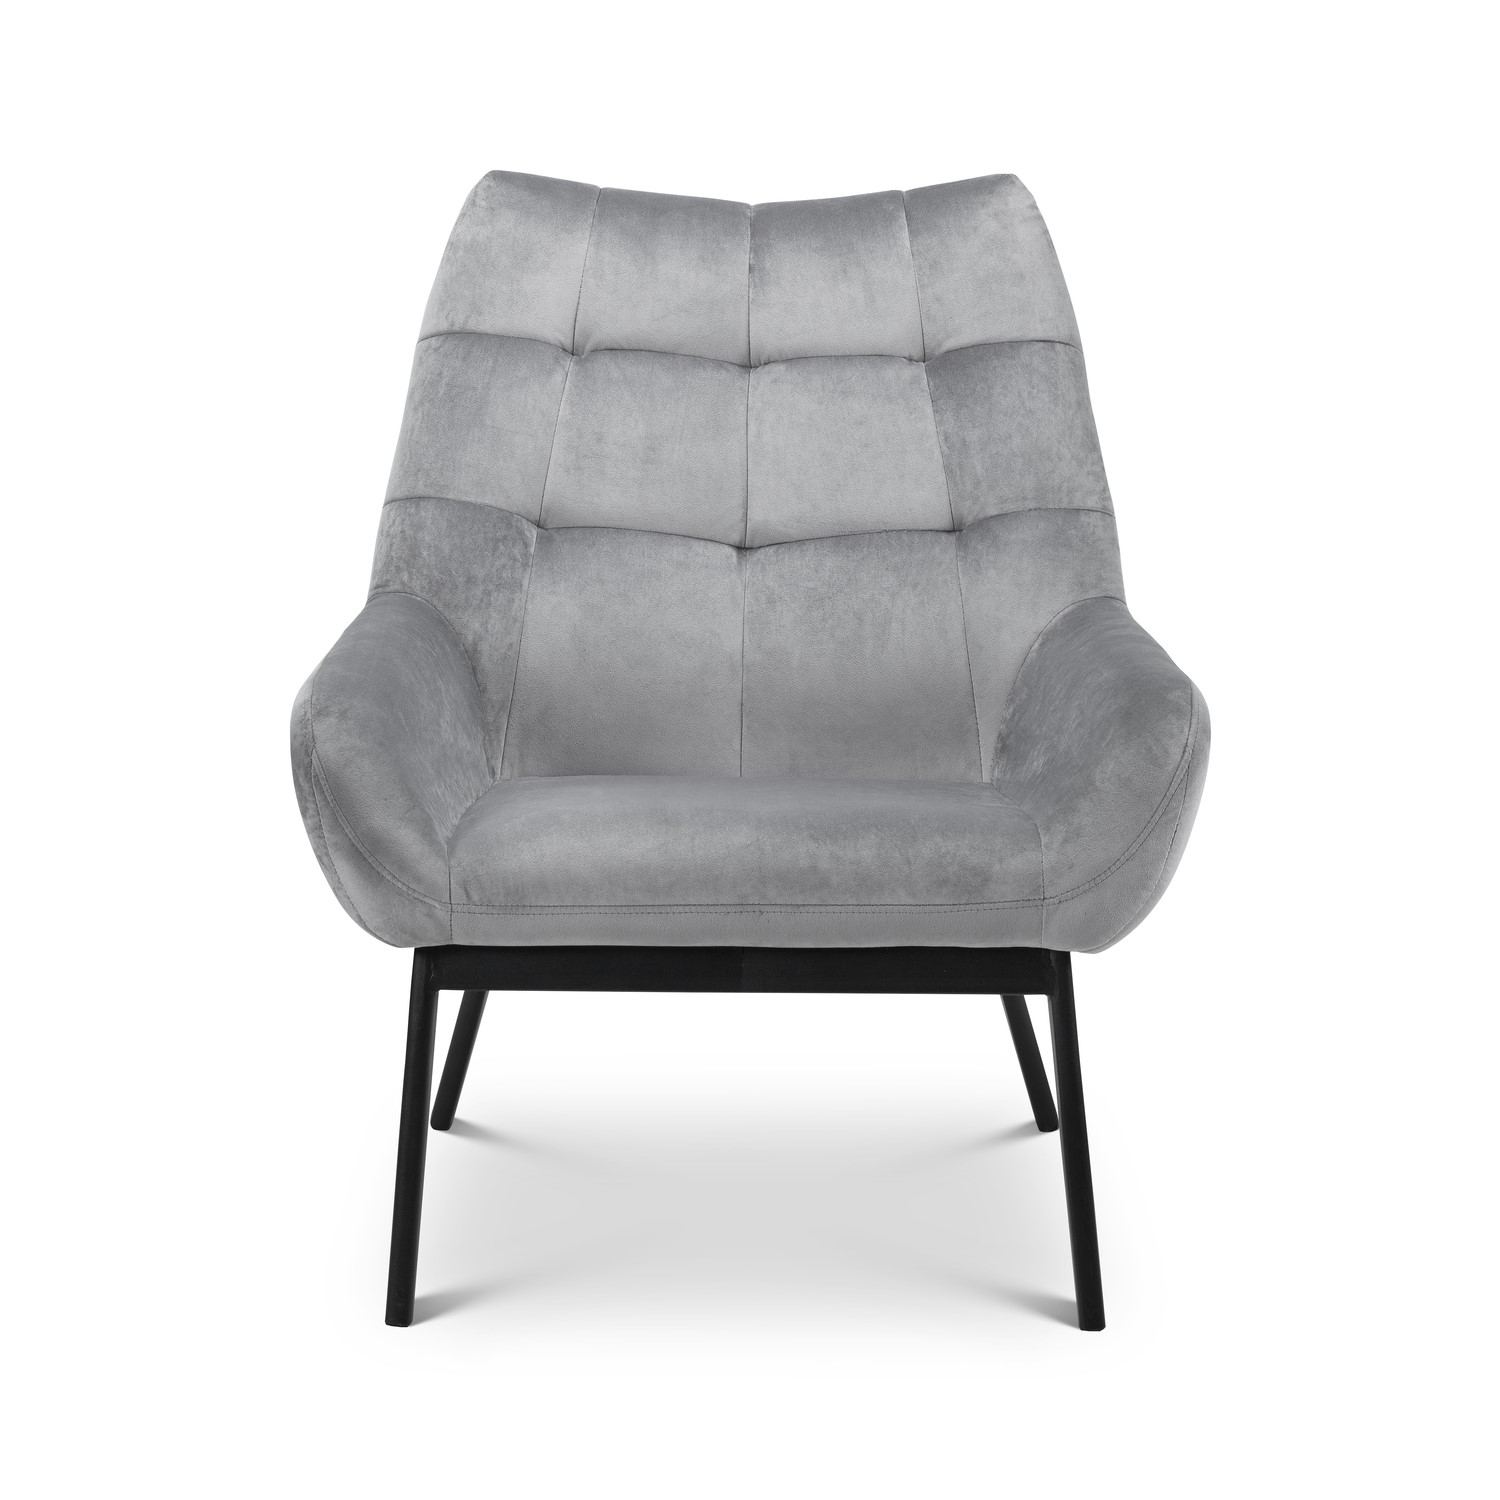 Read more about Grey velvet tufted accent chair julian bowen